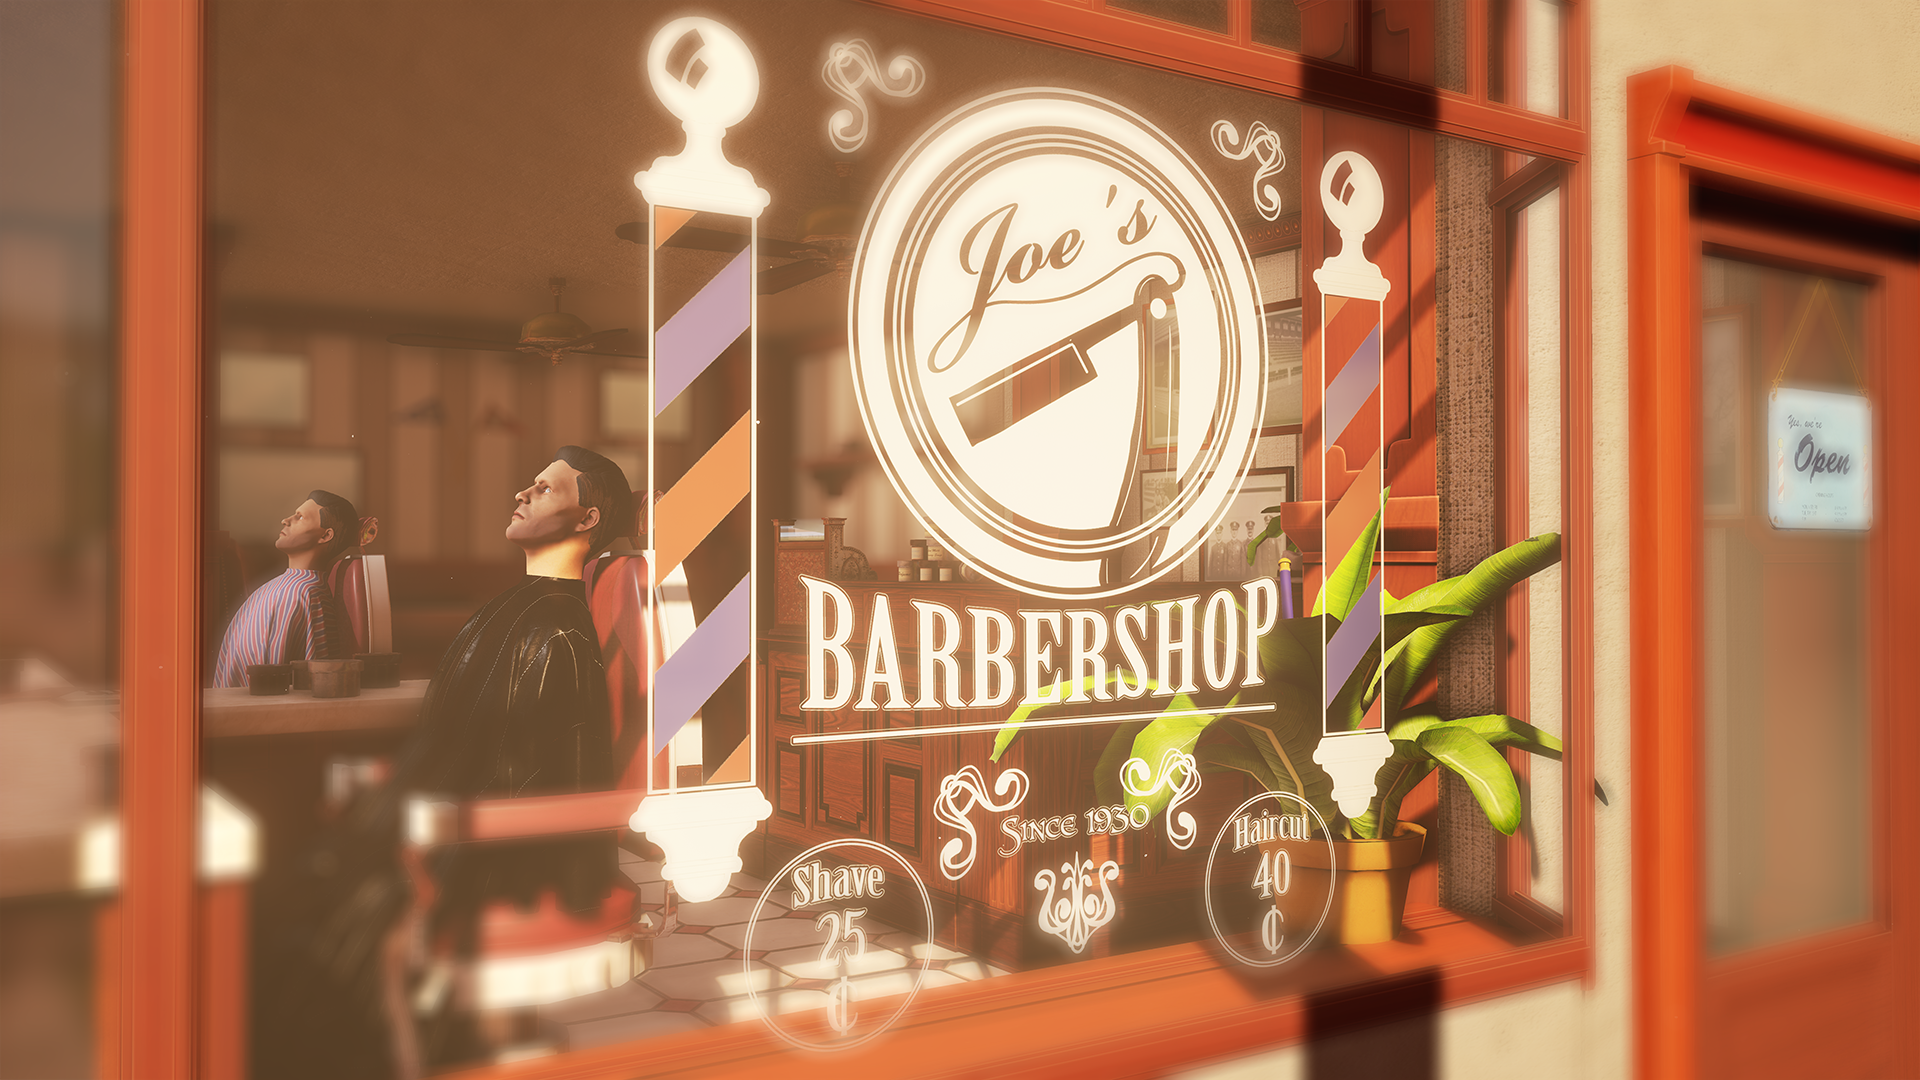 Barbershop Simulator by Shavetastic